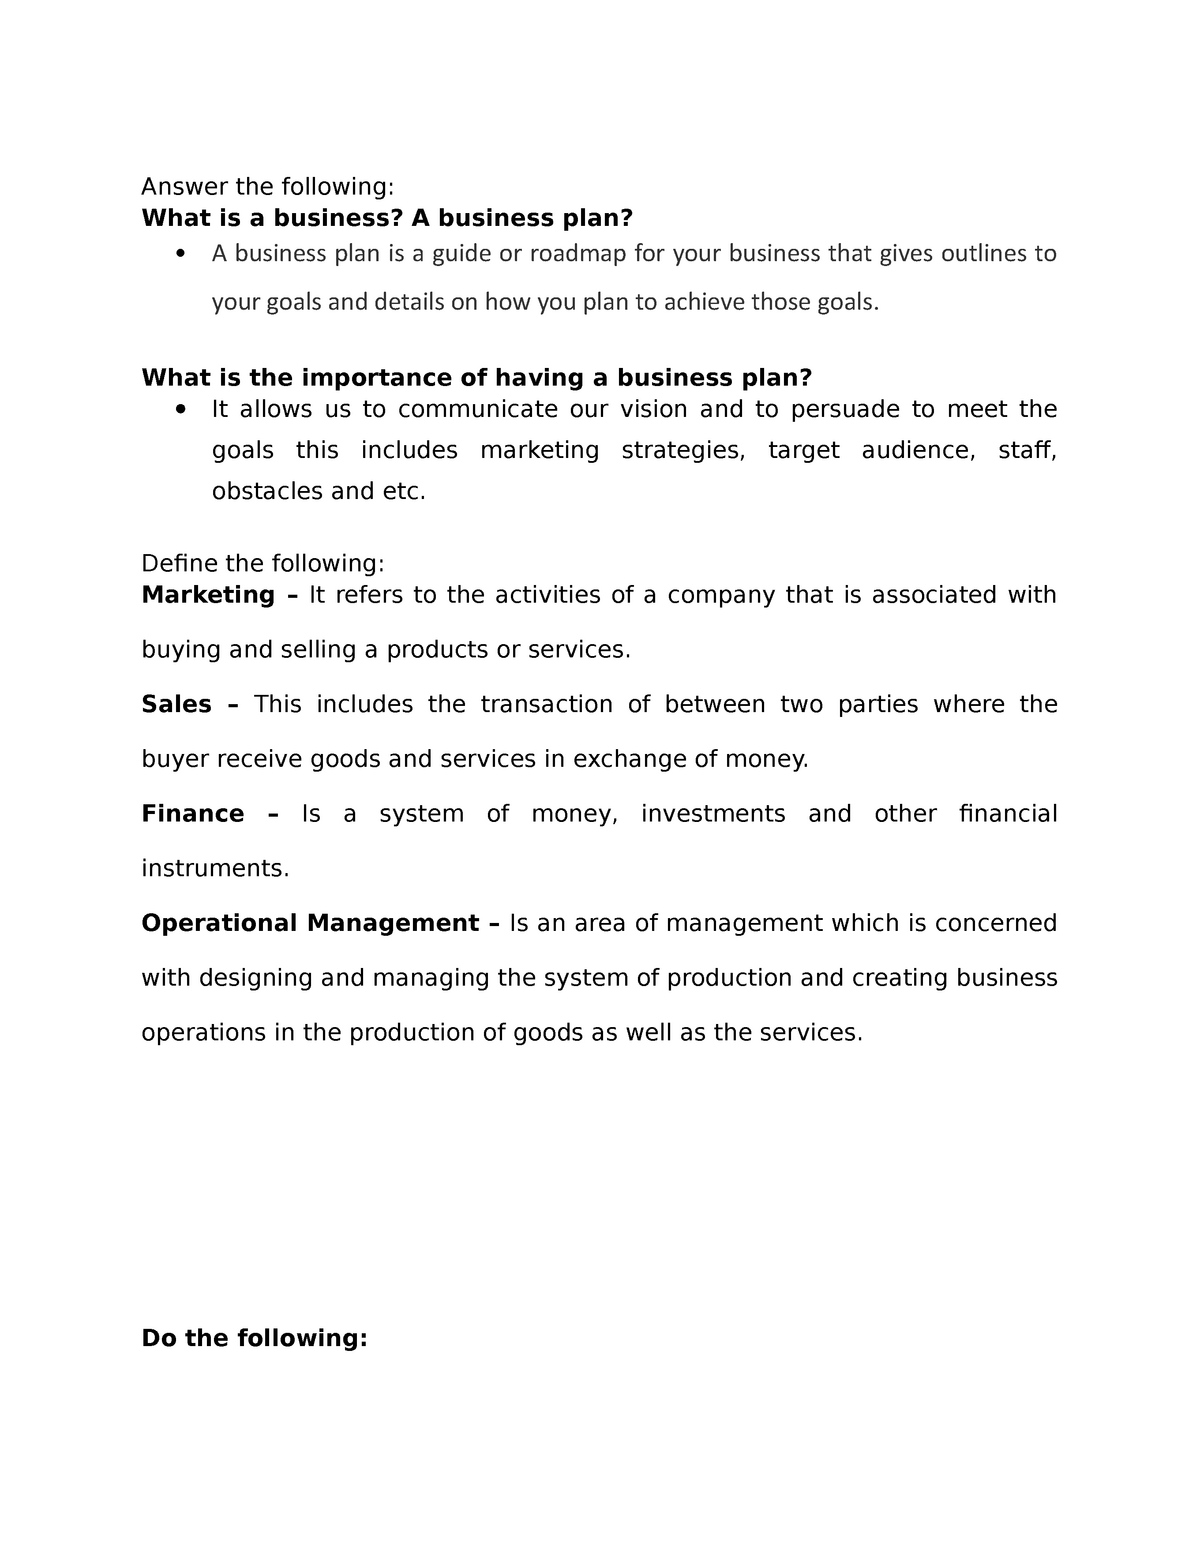 business plan university assignment